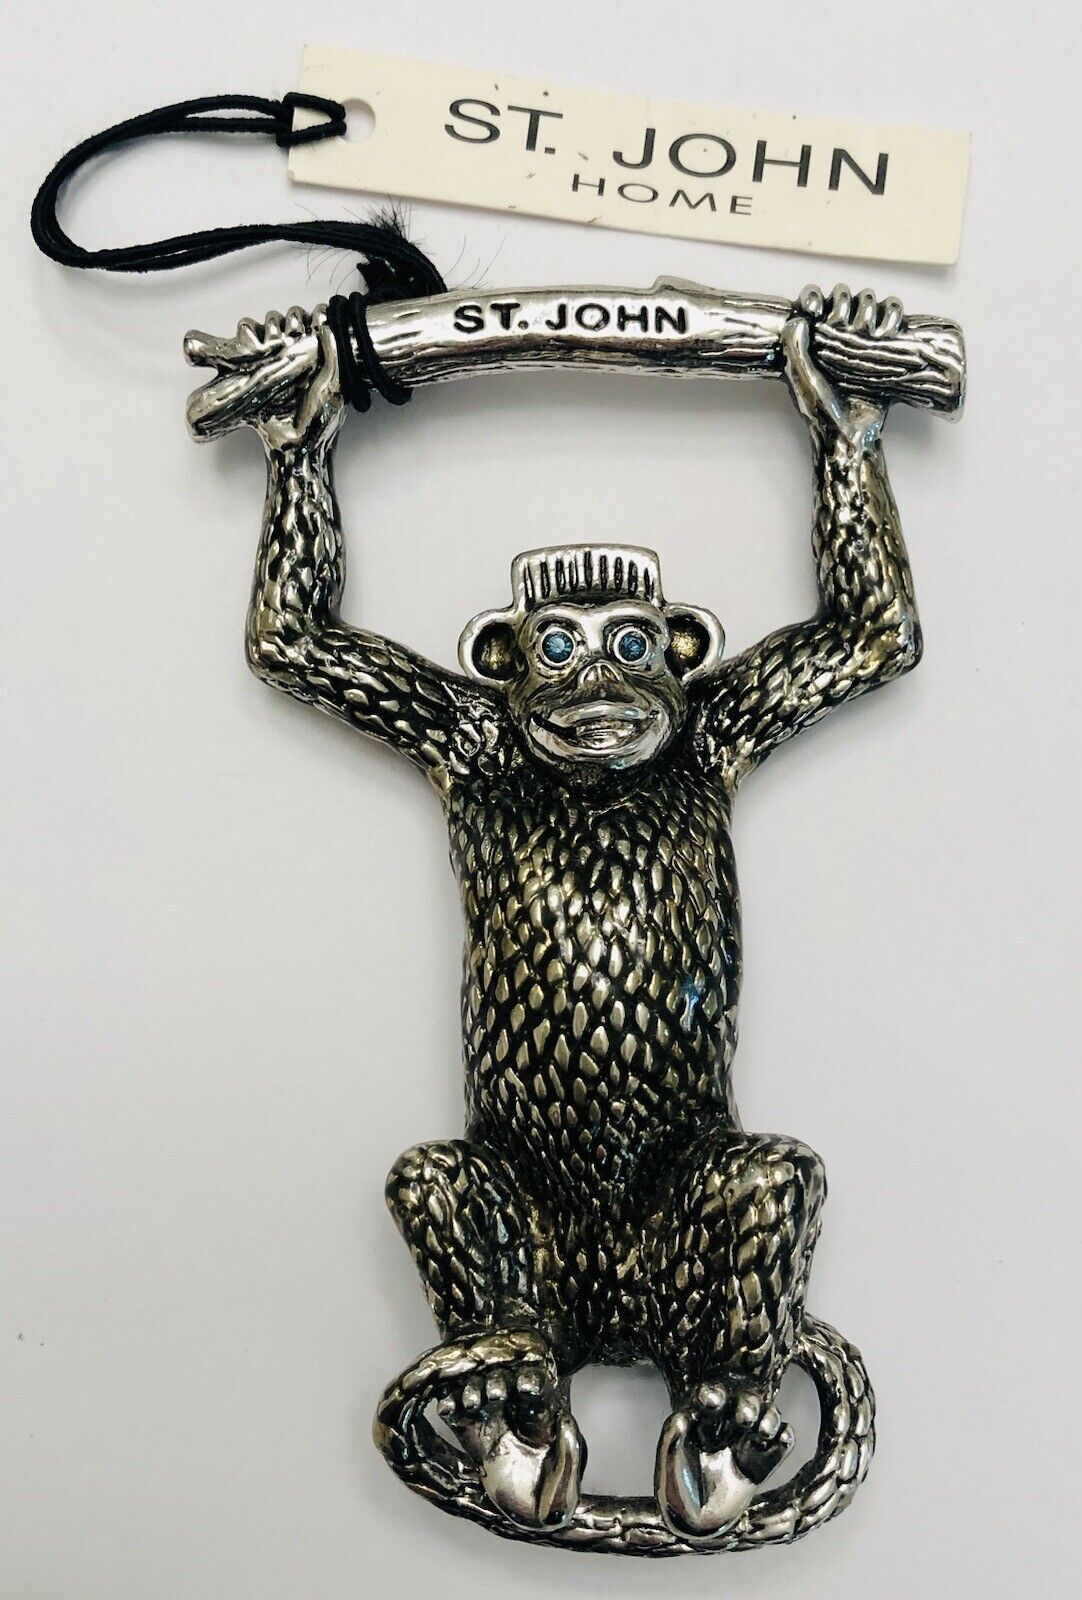 St John Home Swinging Monkey Bottle Opener Vintage NWT Blue Eyes Antiqued Silver